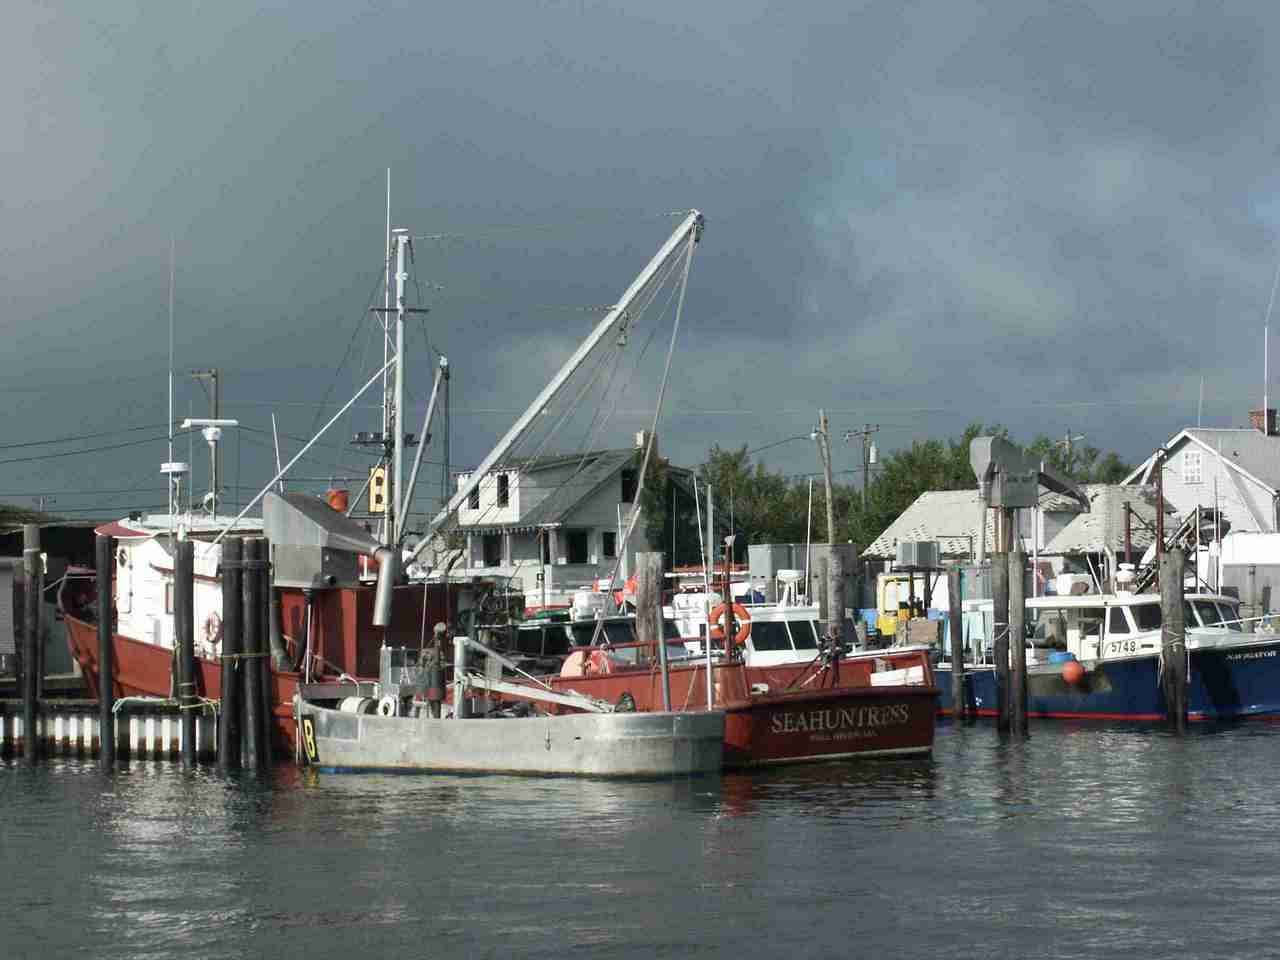 Point Pleasant, NJ: Commercial Fishing Fleet